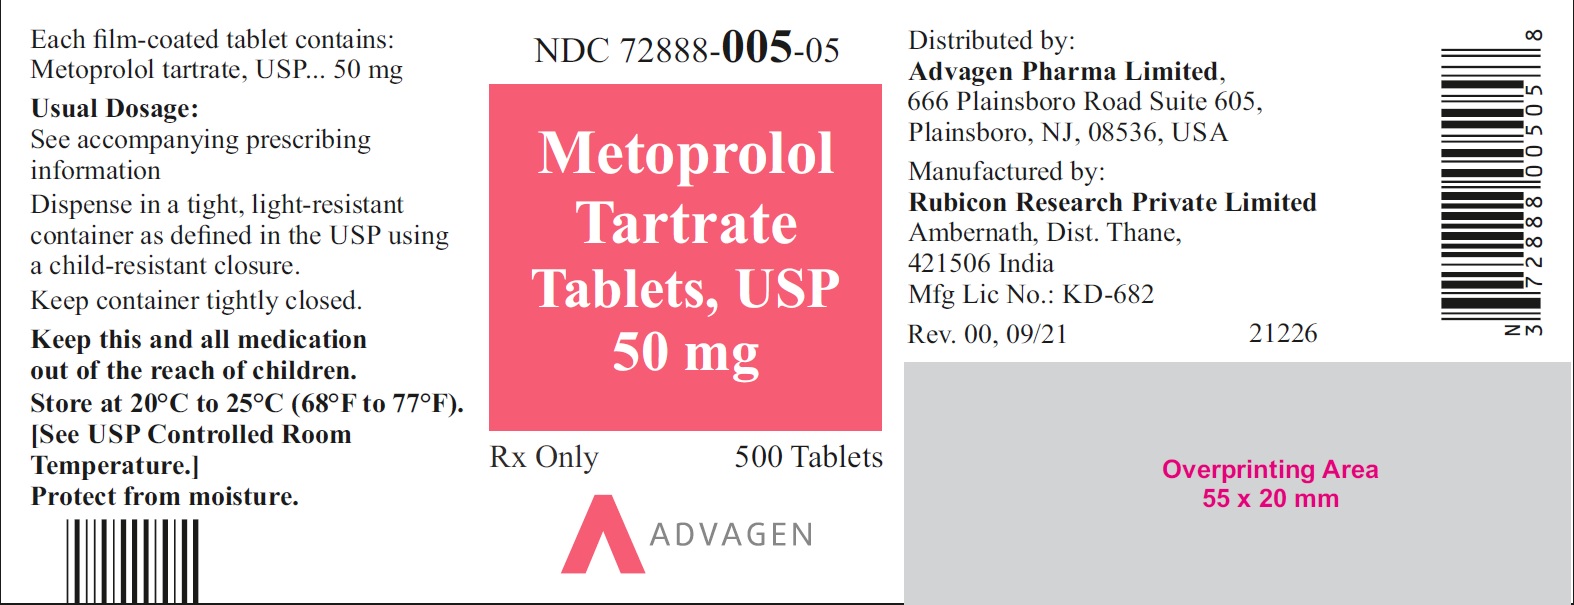 NDC: <a href=/NDC/72888-005-05>72888-005-05</a> - Metoprolol Tartrate Tablets, USP 50 mg - 500 Tablets